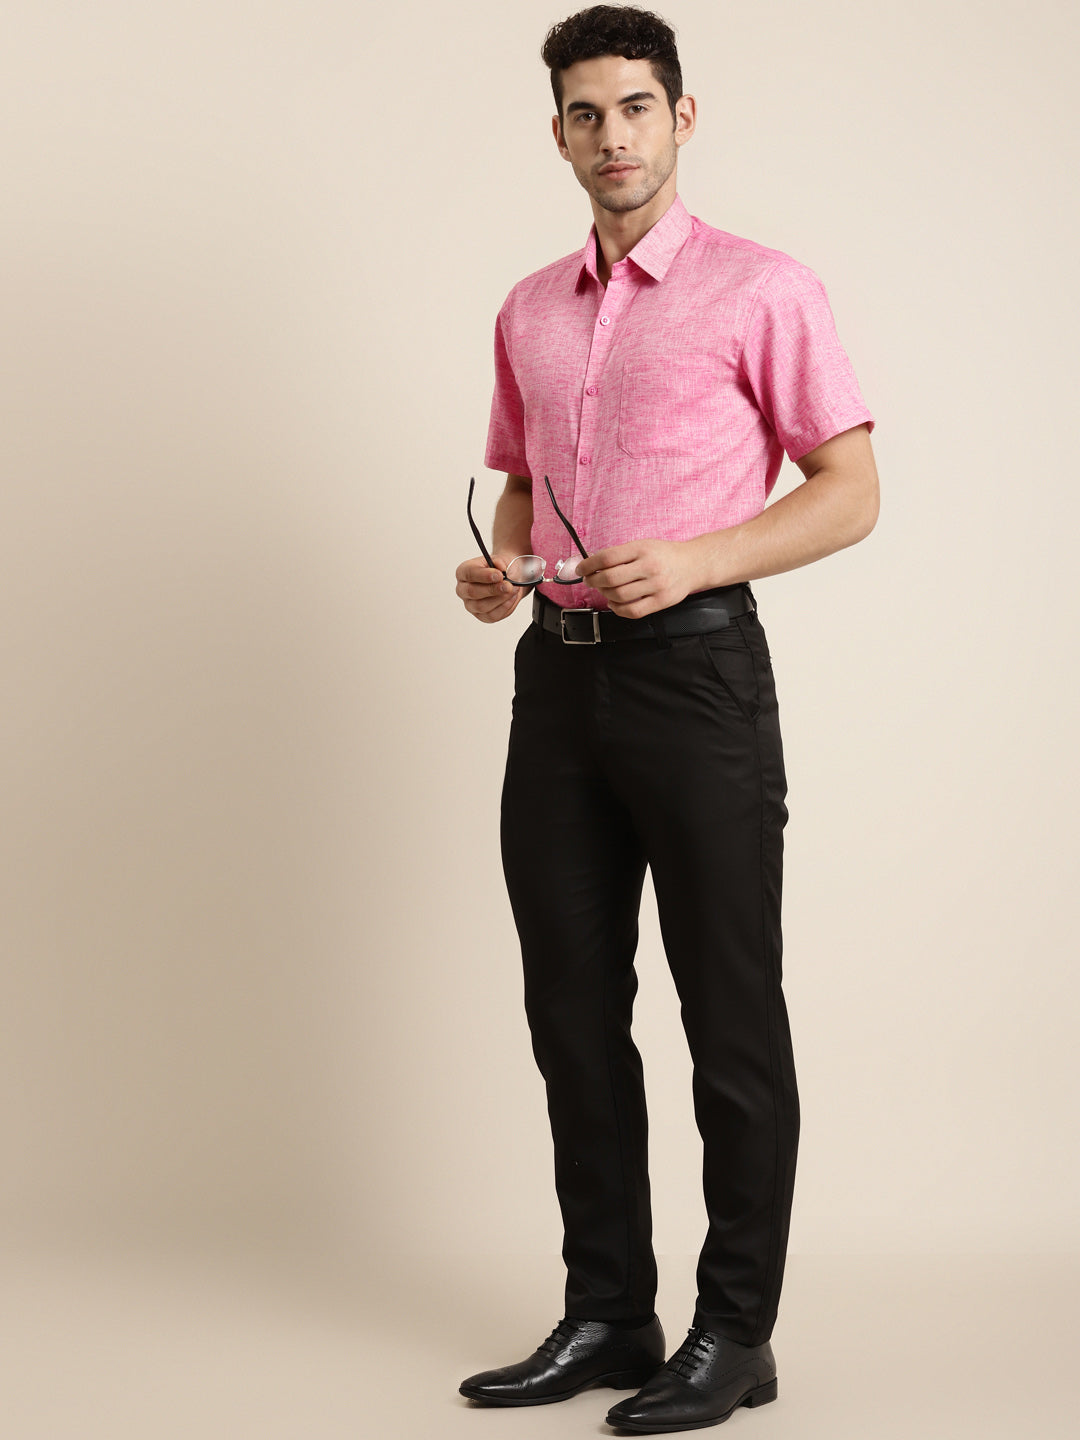 Men's Cotton Blend Pink Half sleeves Casual Shirt